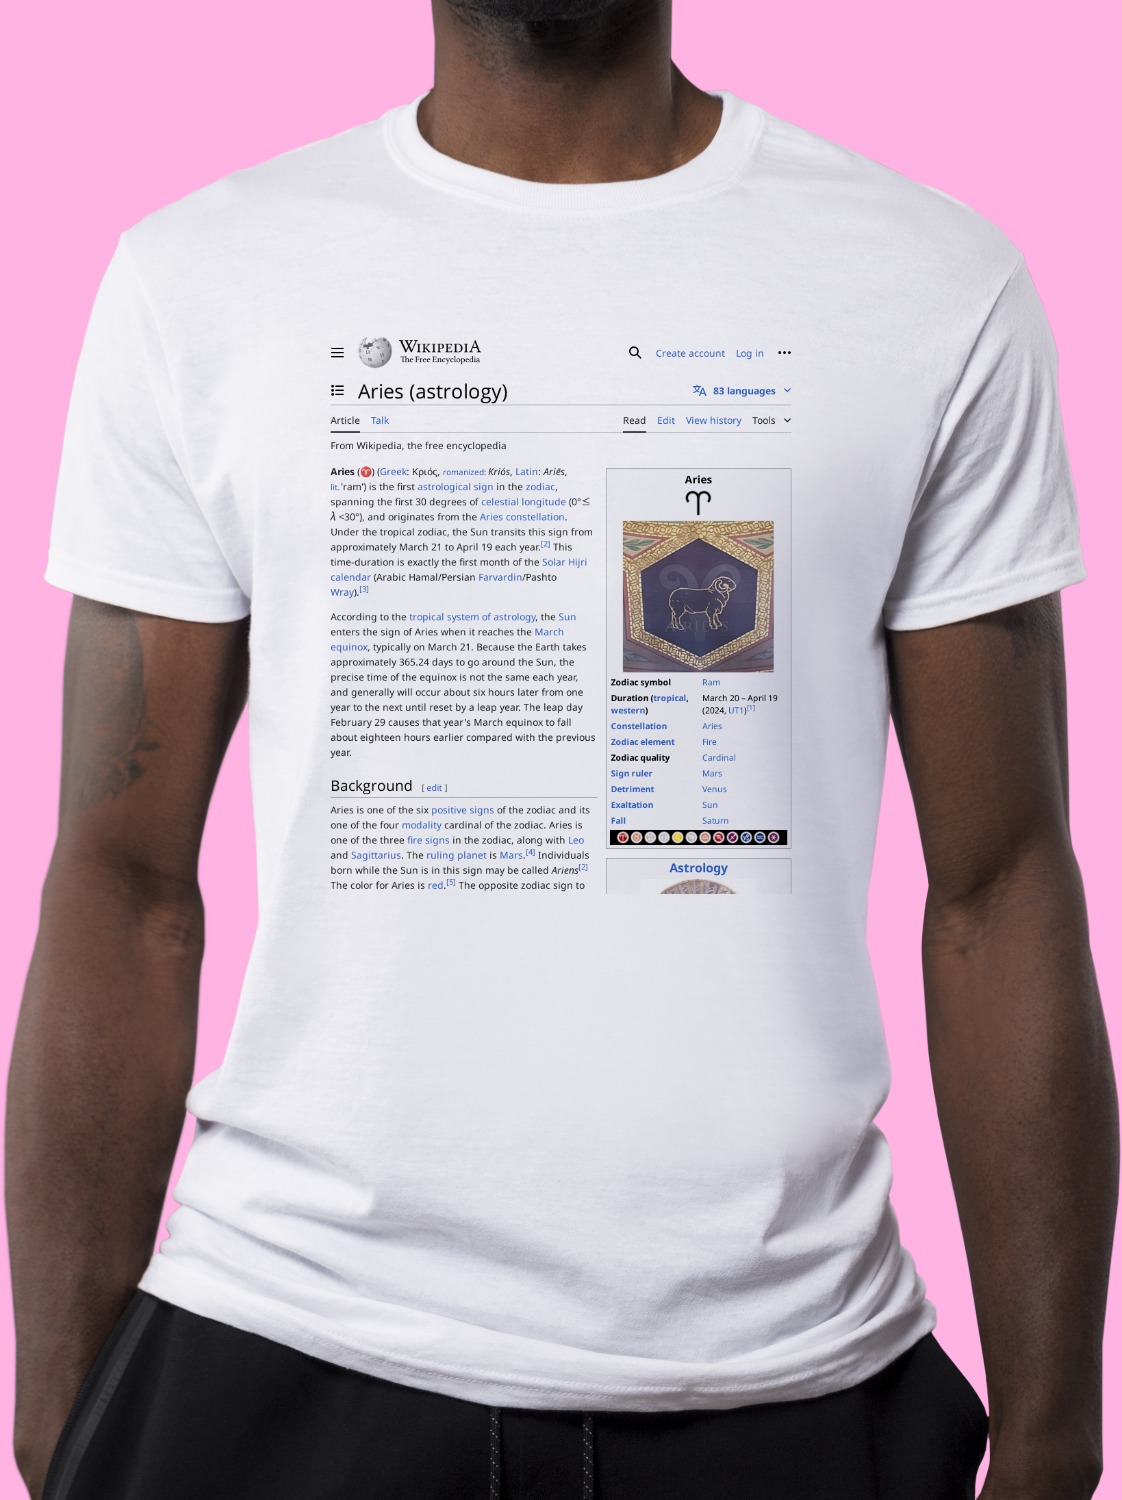 Aries_(astrology) Wikipedia Shirt